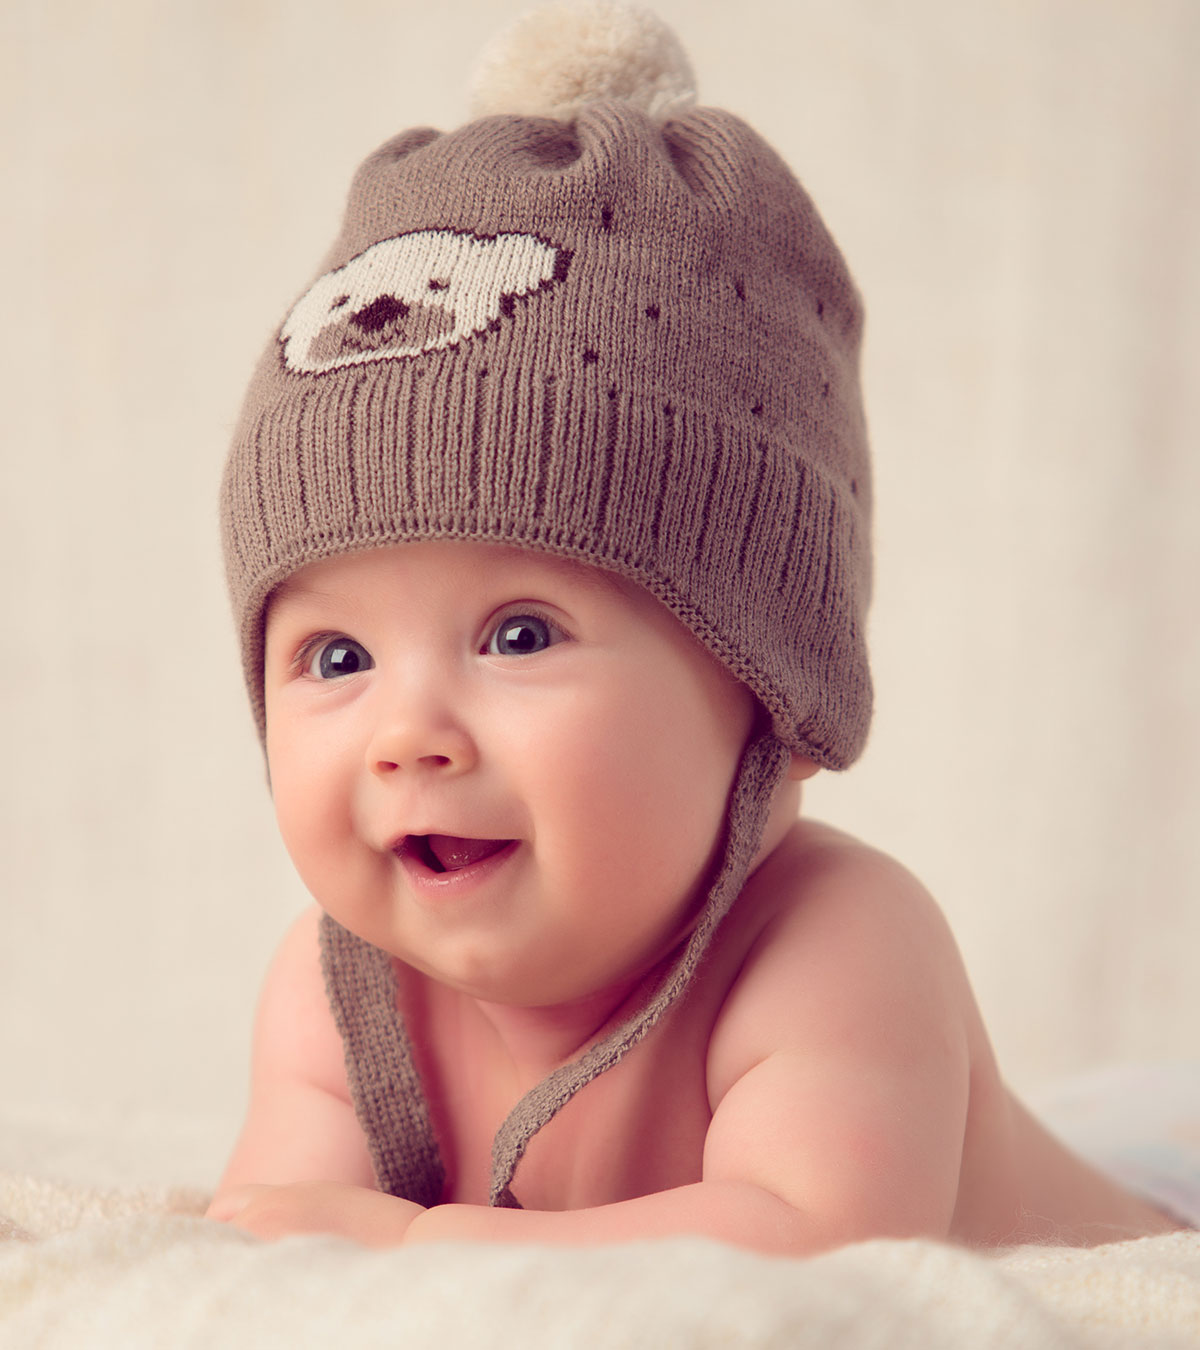 Top 999+ cute stylish baby boy images – Amazing Collection cute stylish baby boy images Full 4K